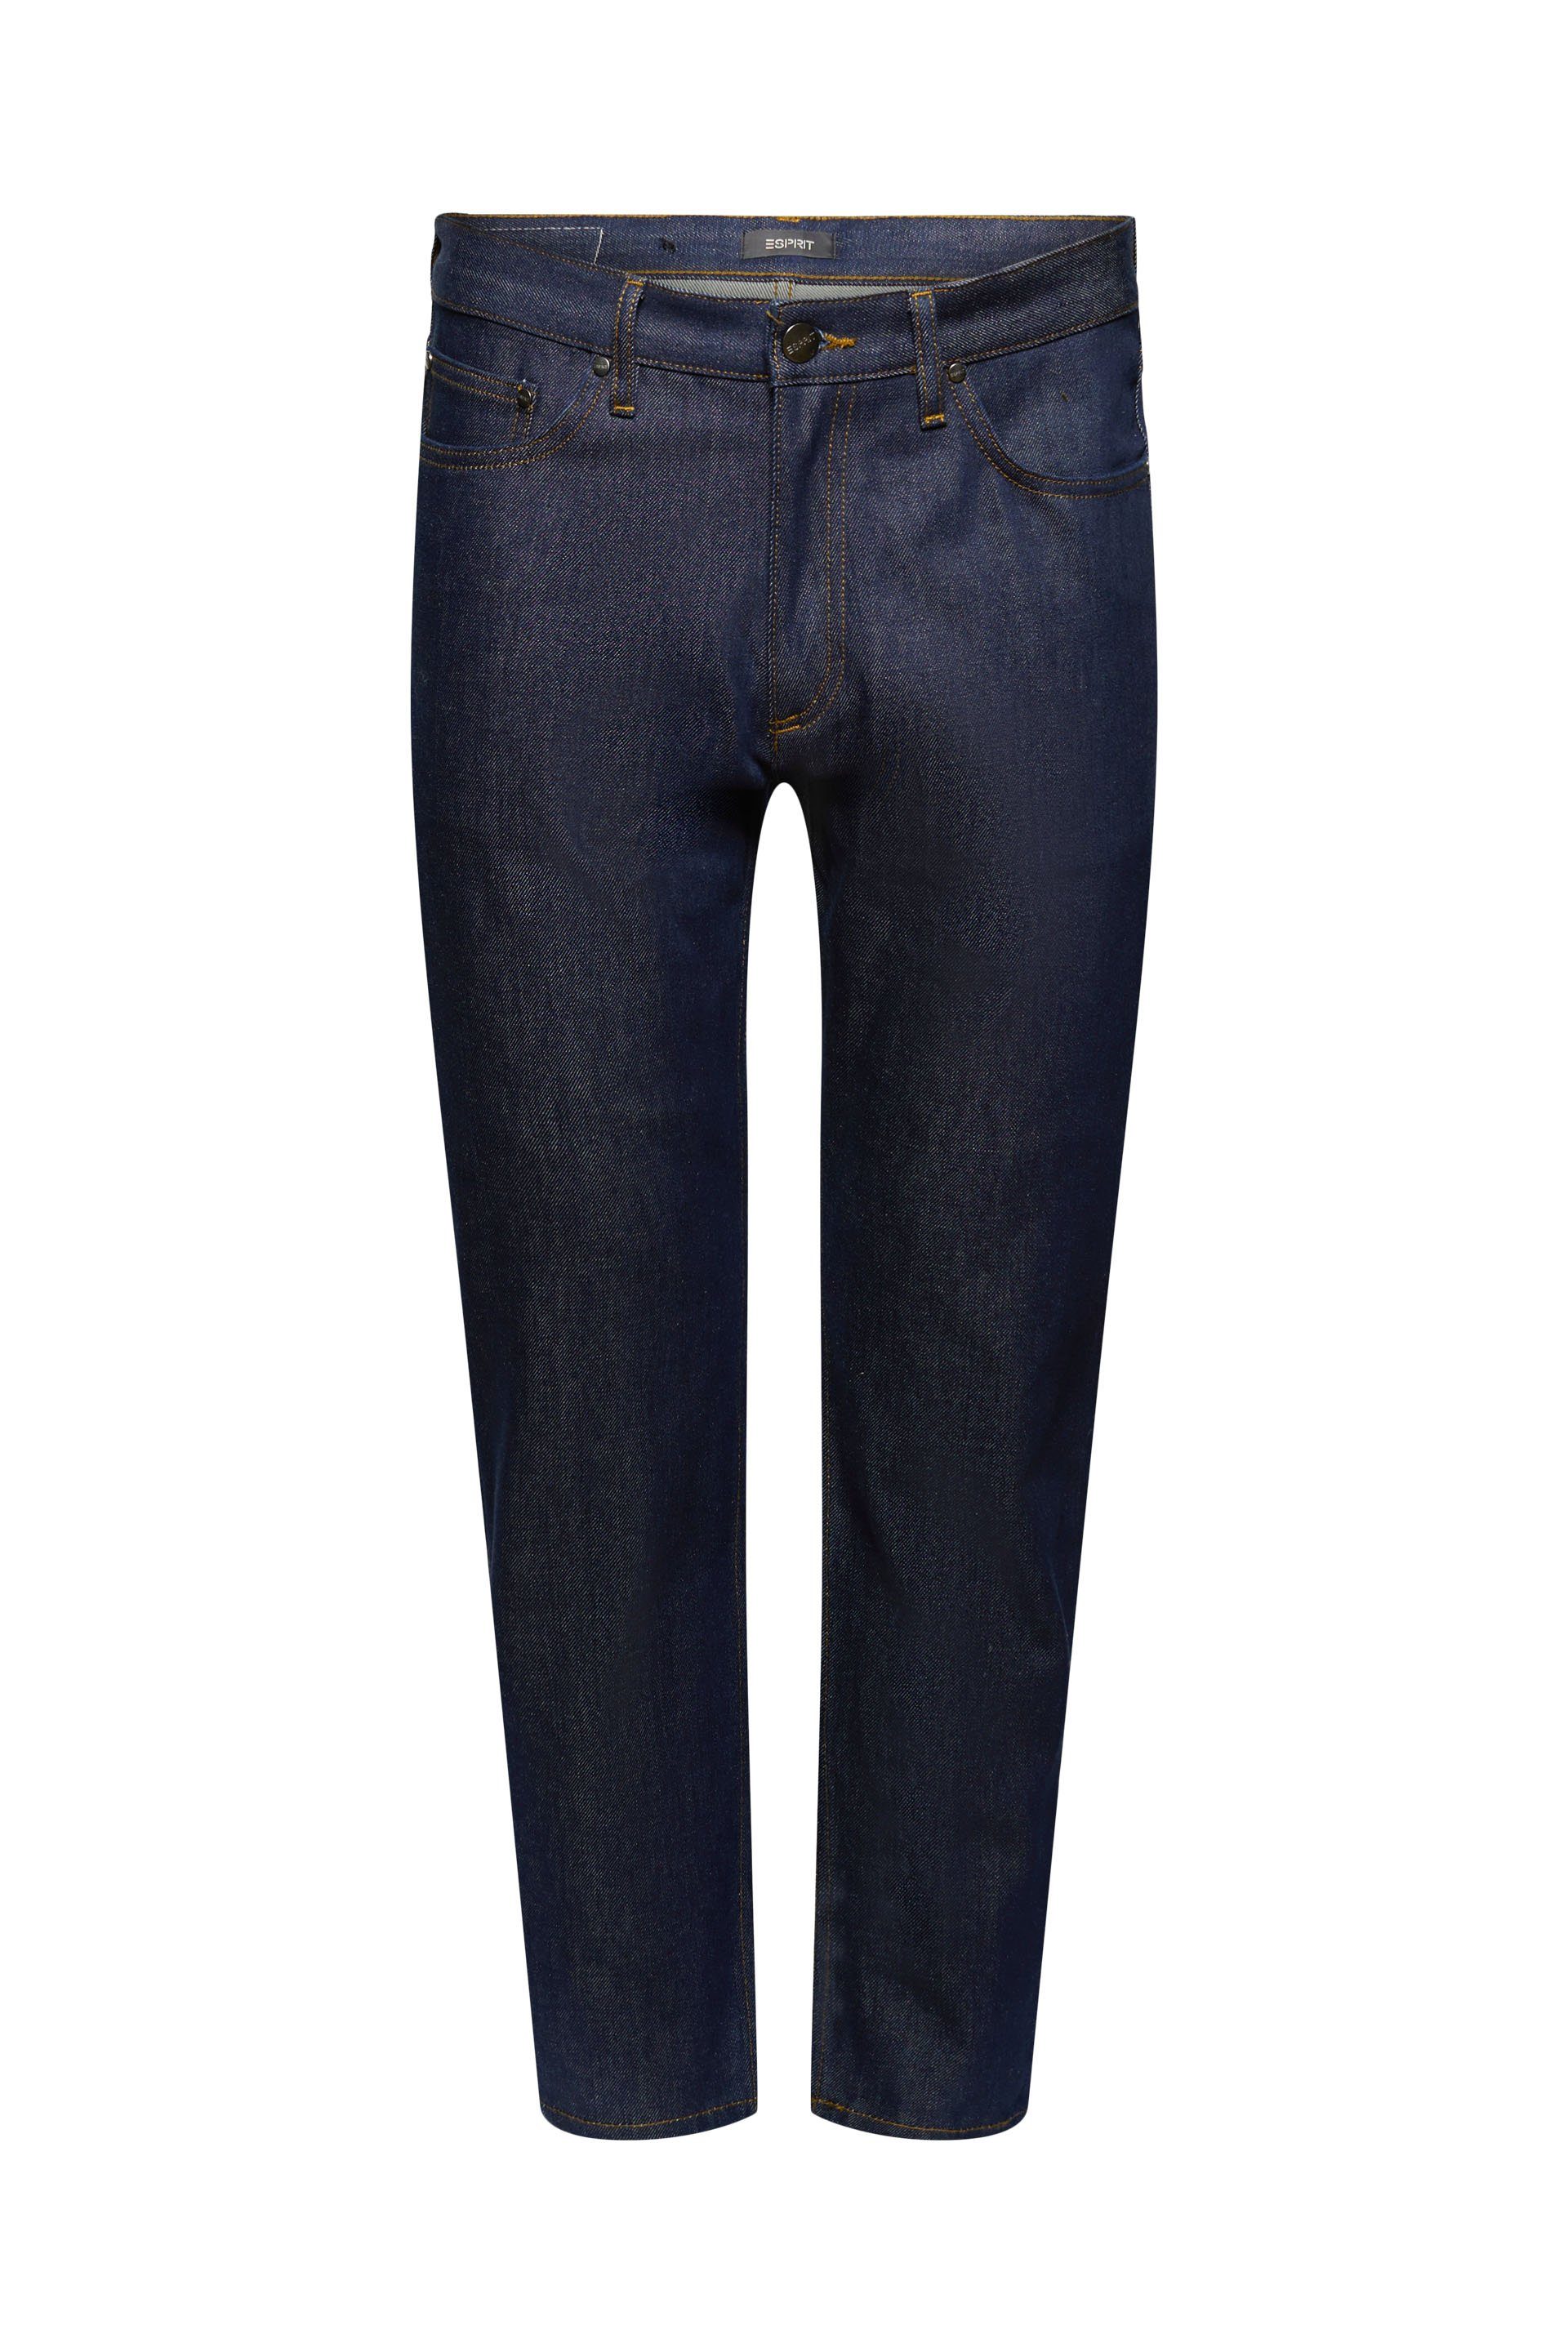 Esprit 5-Pocket-Jeans